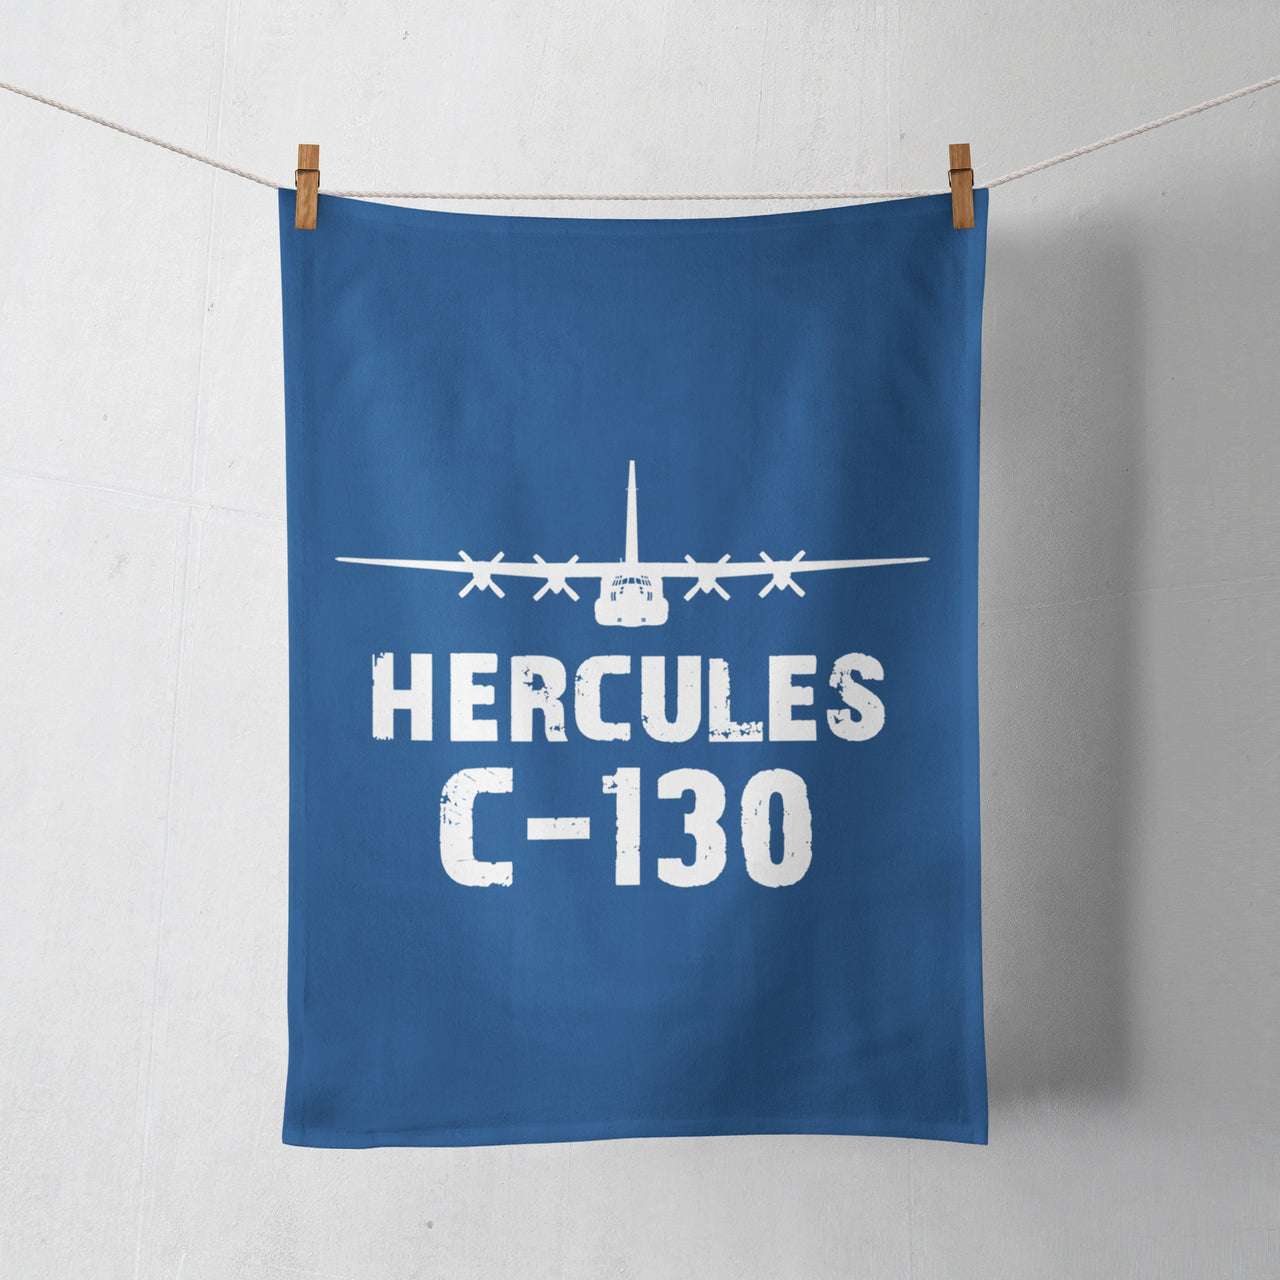 Hercules C-130 & Plane Designed Towels